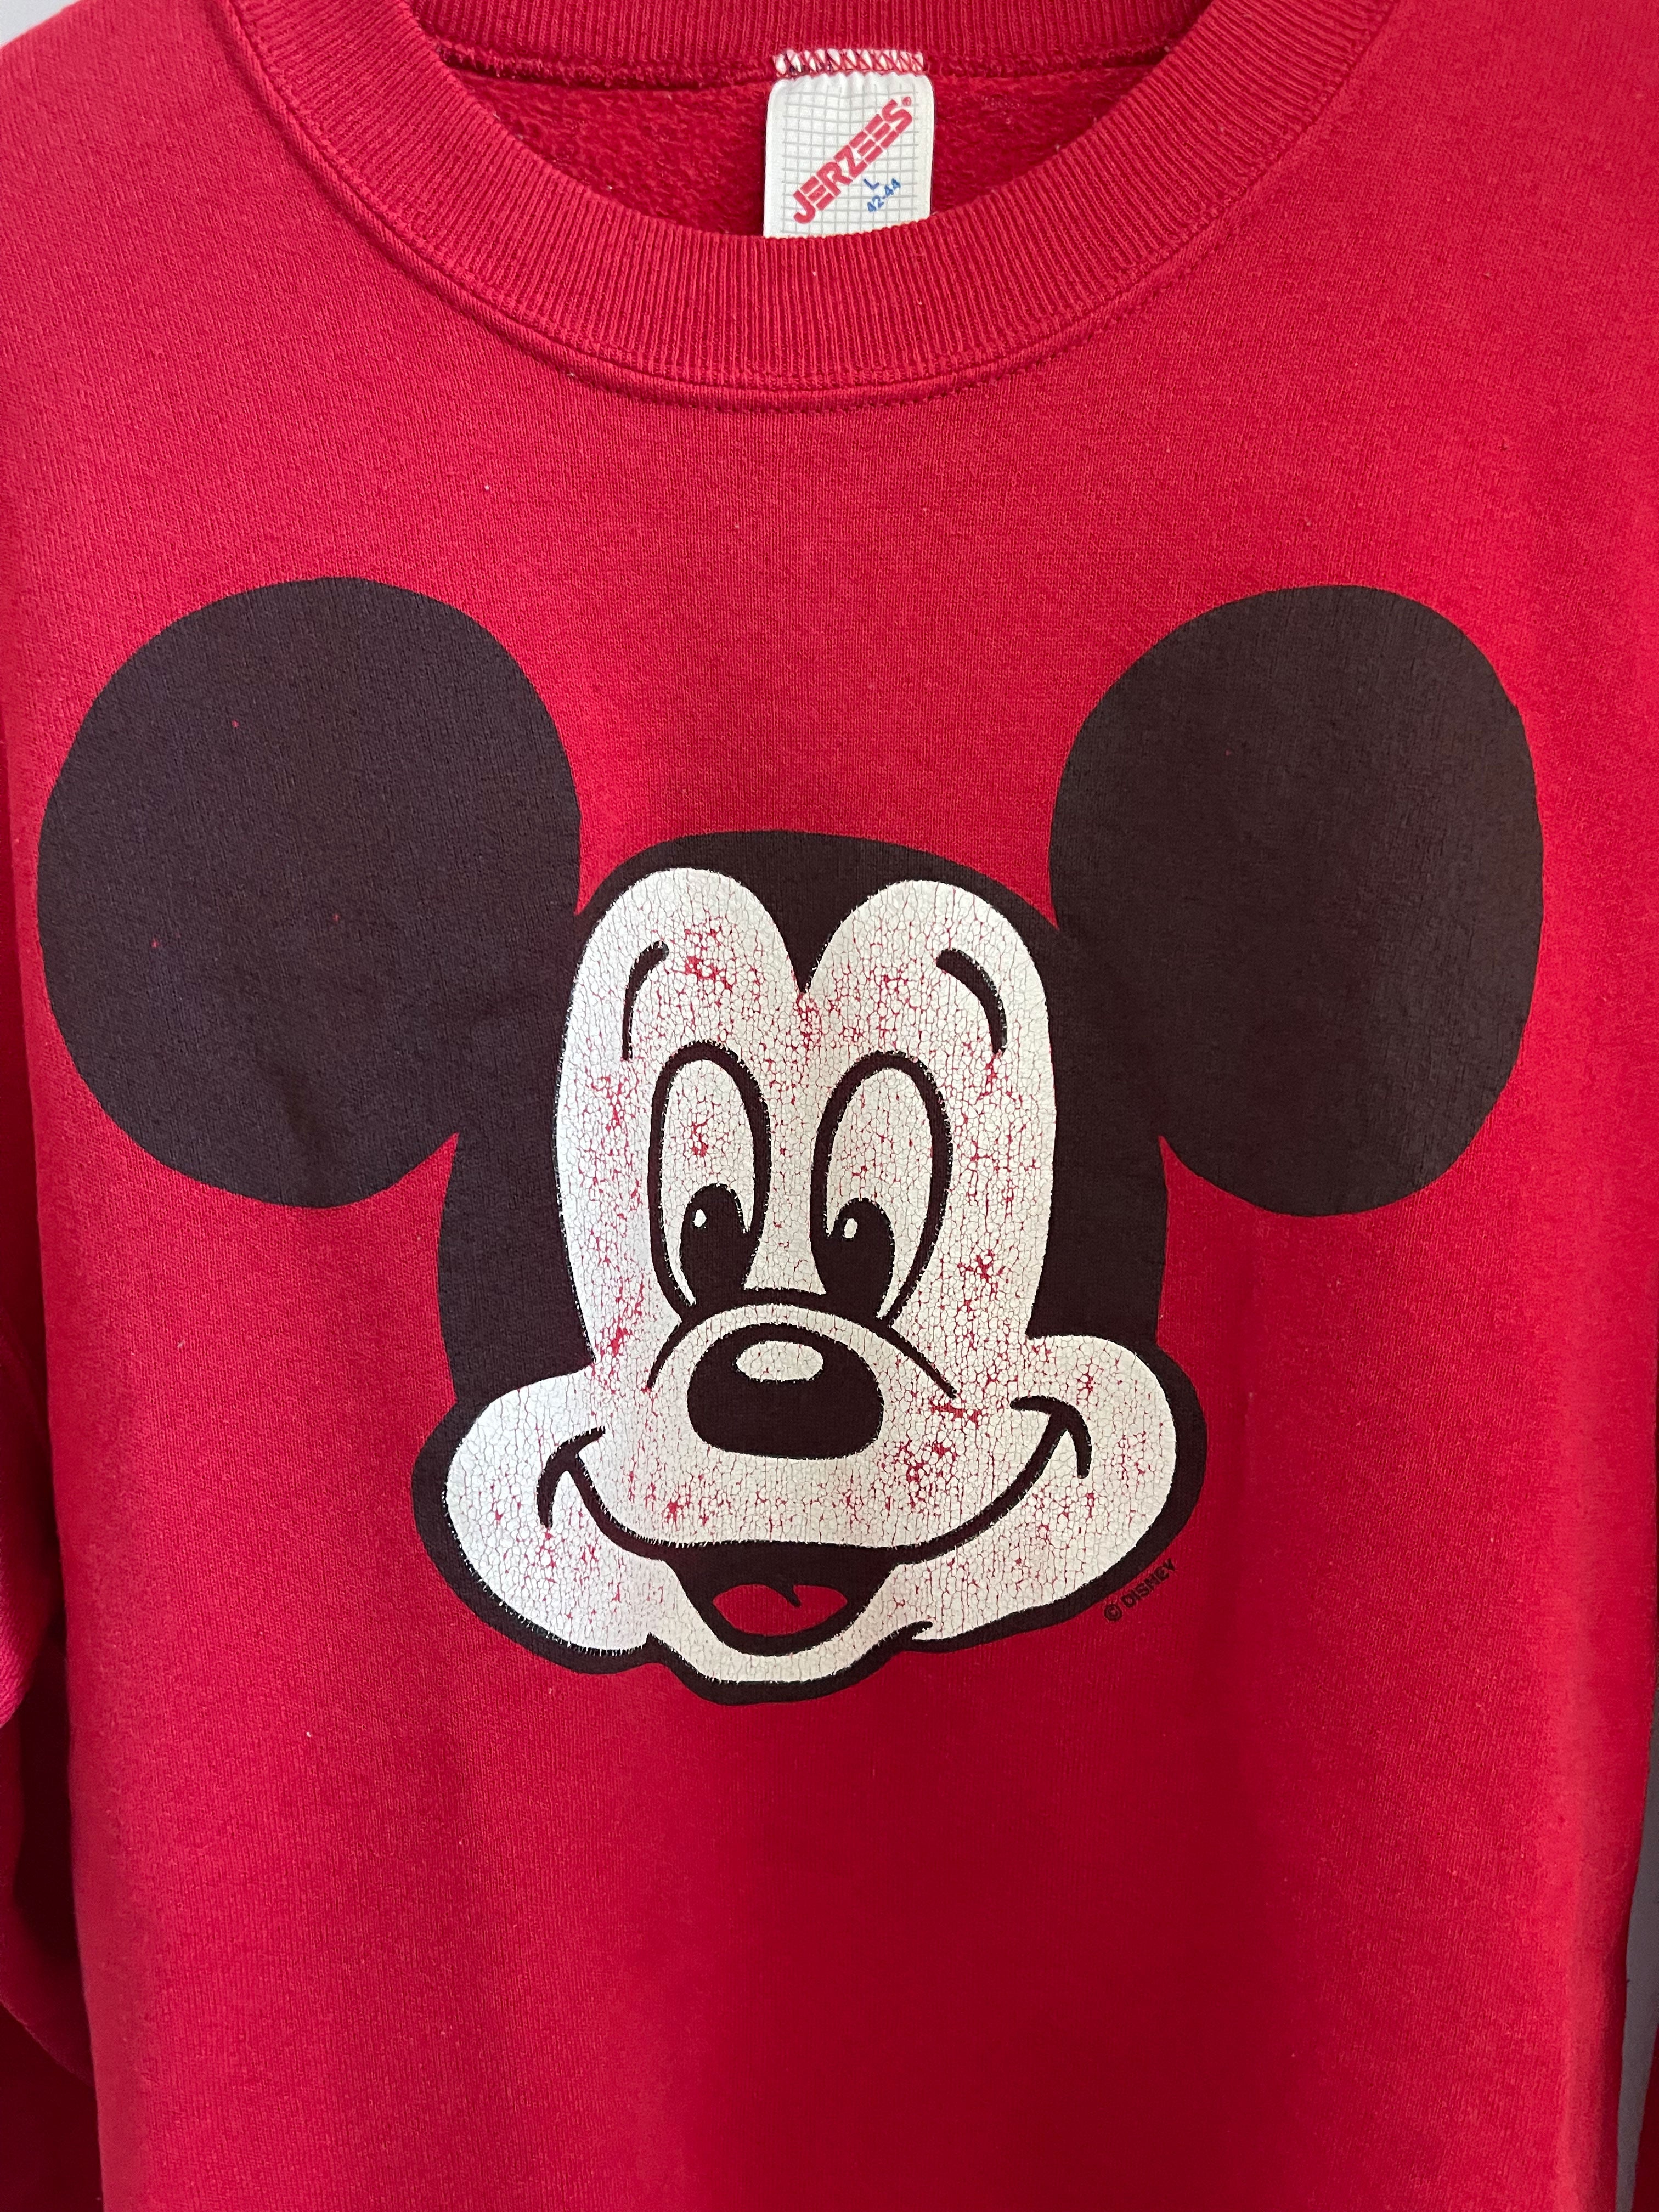 Vintage Mikey Mouse 80s Sweatshirt